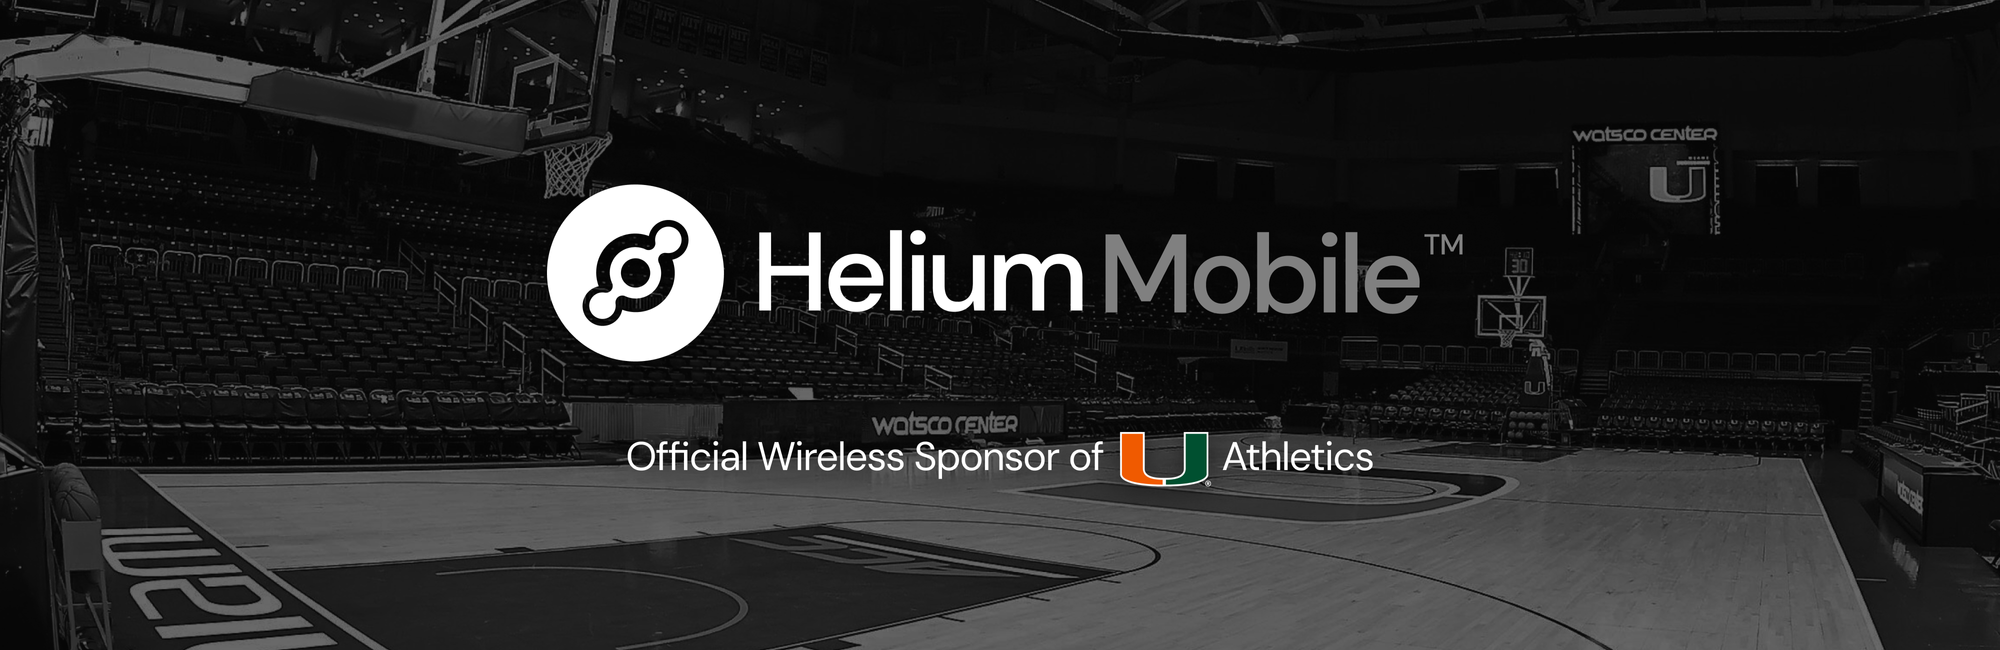 University of Miami Athletics Partners with Helium Mobile™